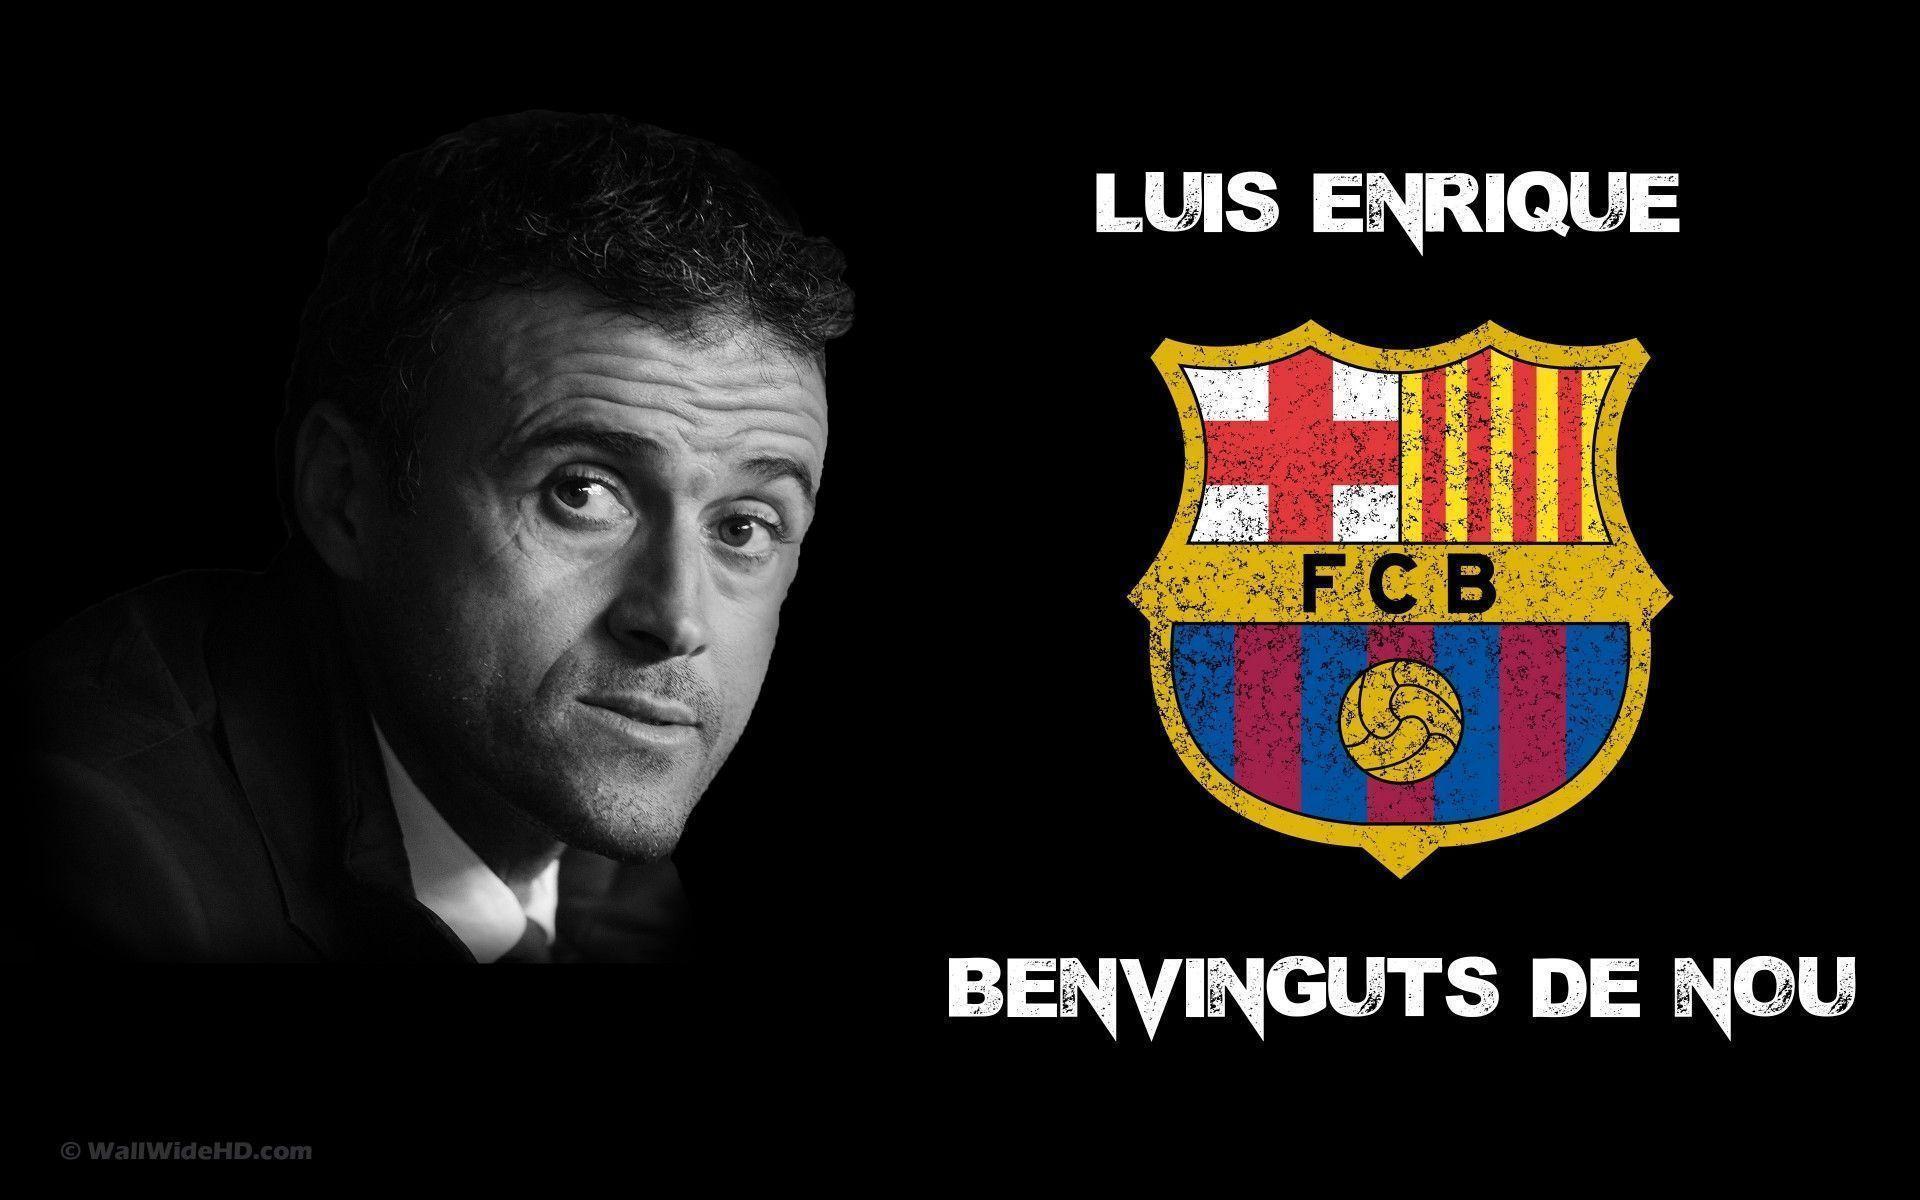 Luis Enrique 2014 FC Barcelona Manager Wallpaper Wide or HD. Male